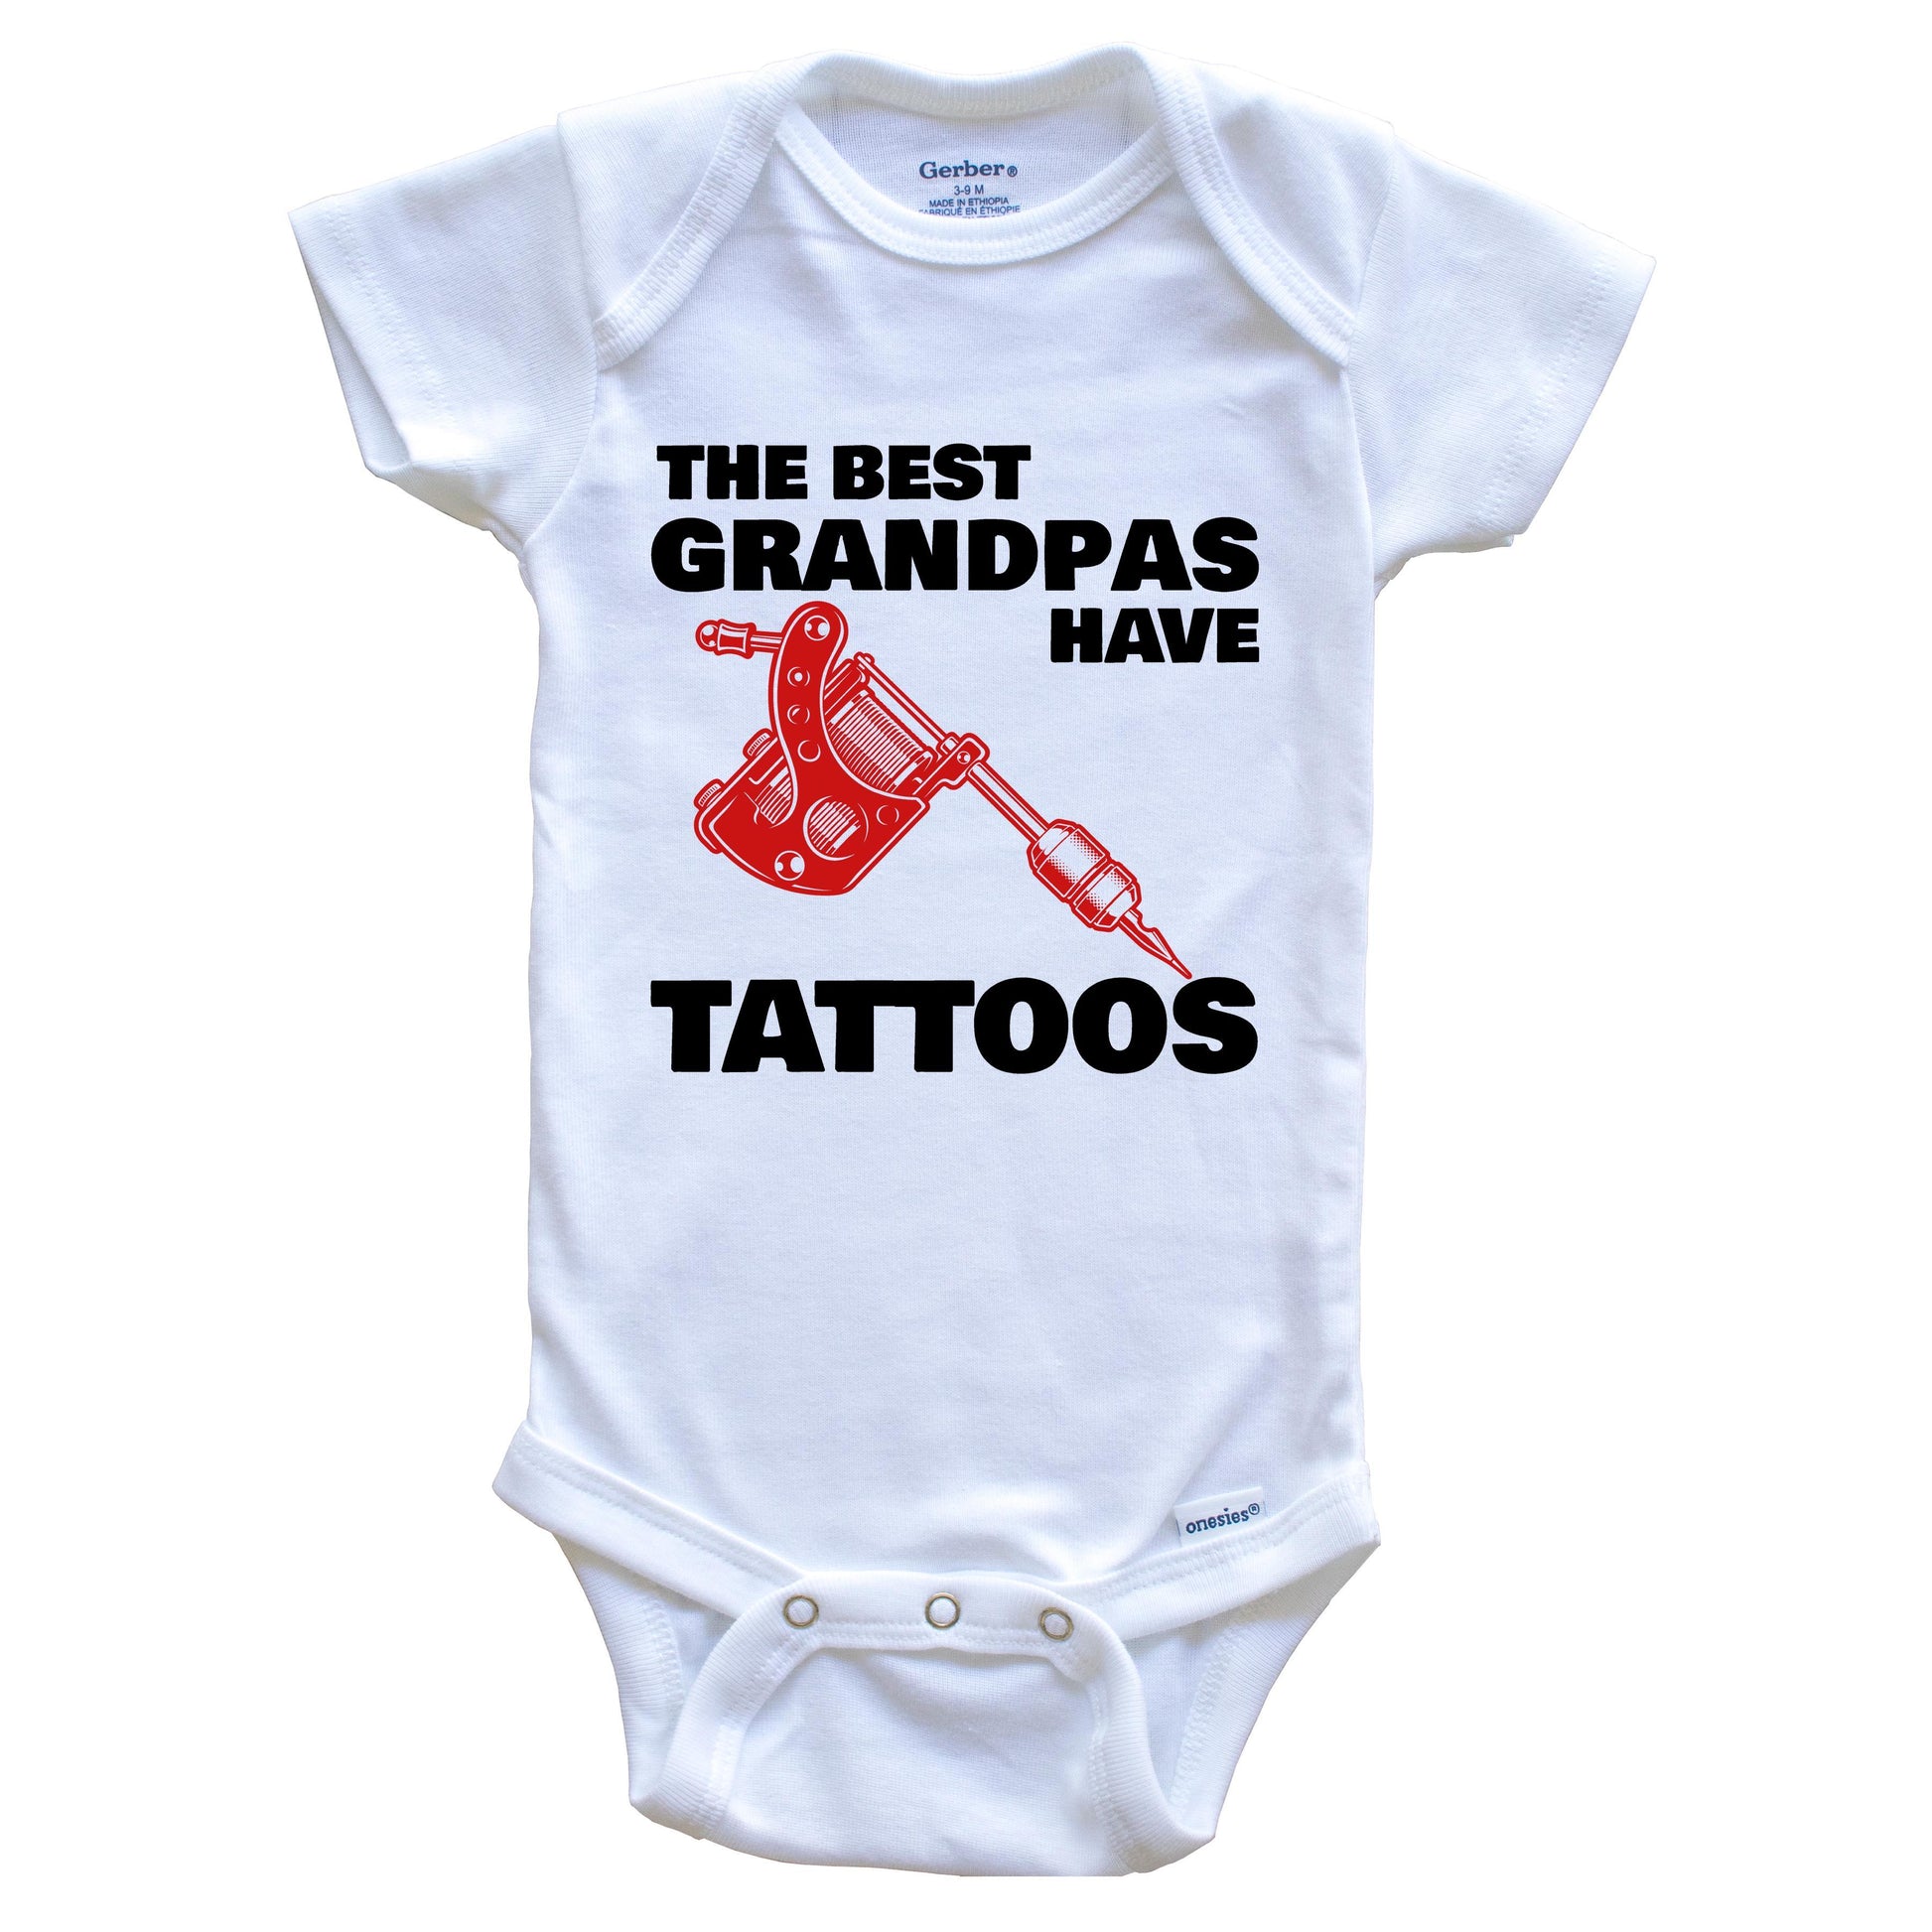 The Best Grandpas Have Tattoos Funny Onesie - One Piece Baby Bodysuit